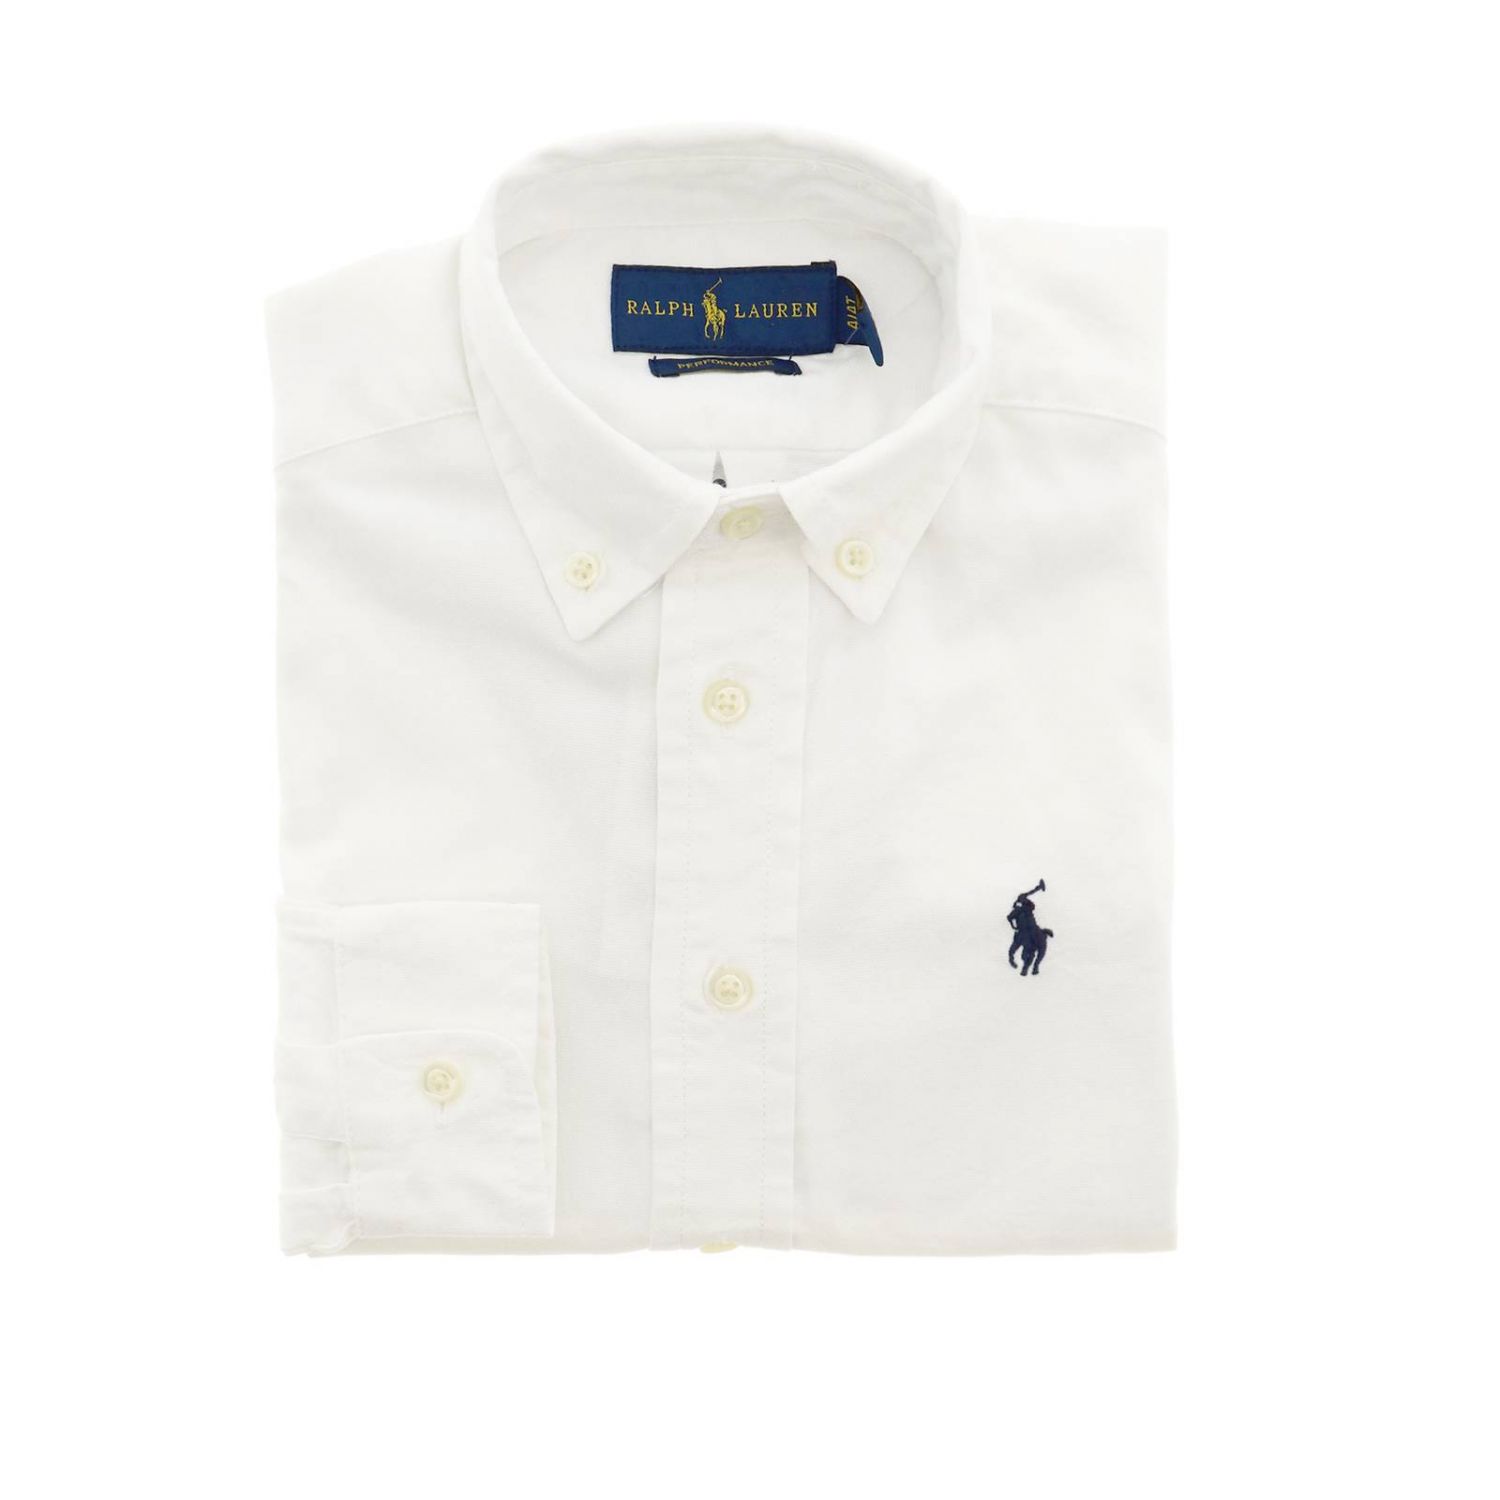 Polo Ralph Lauren Toddler Outlet: Shirt kids - White | Shirt Polo Ralph ...